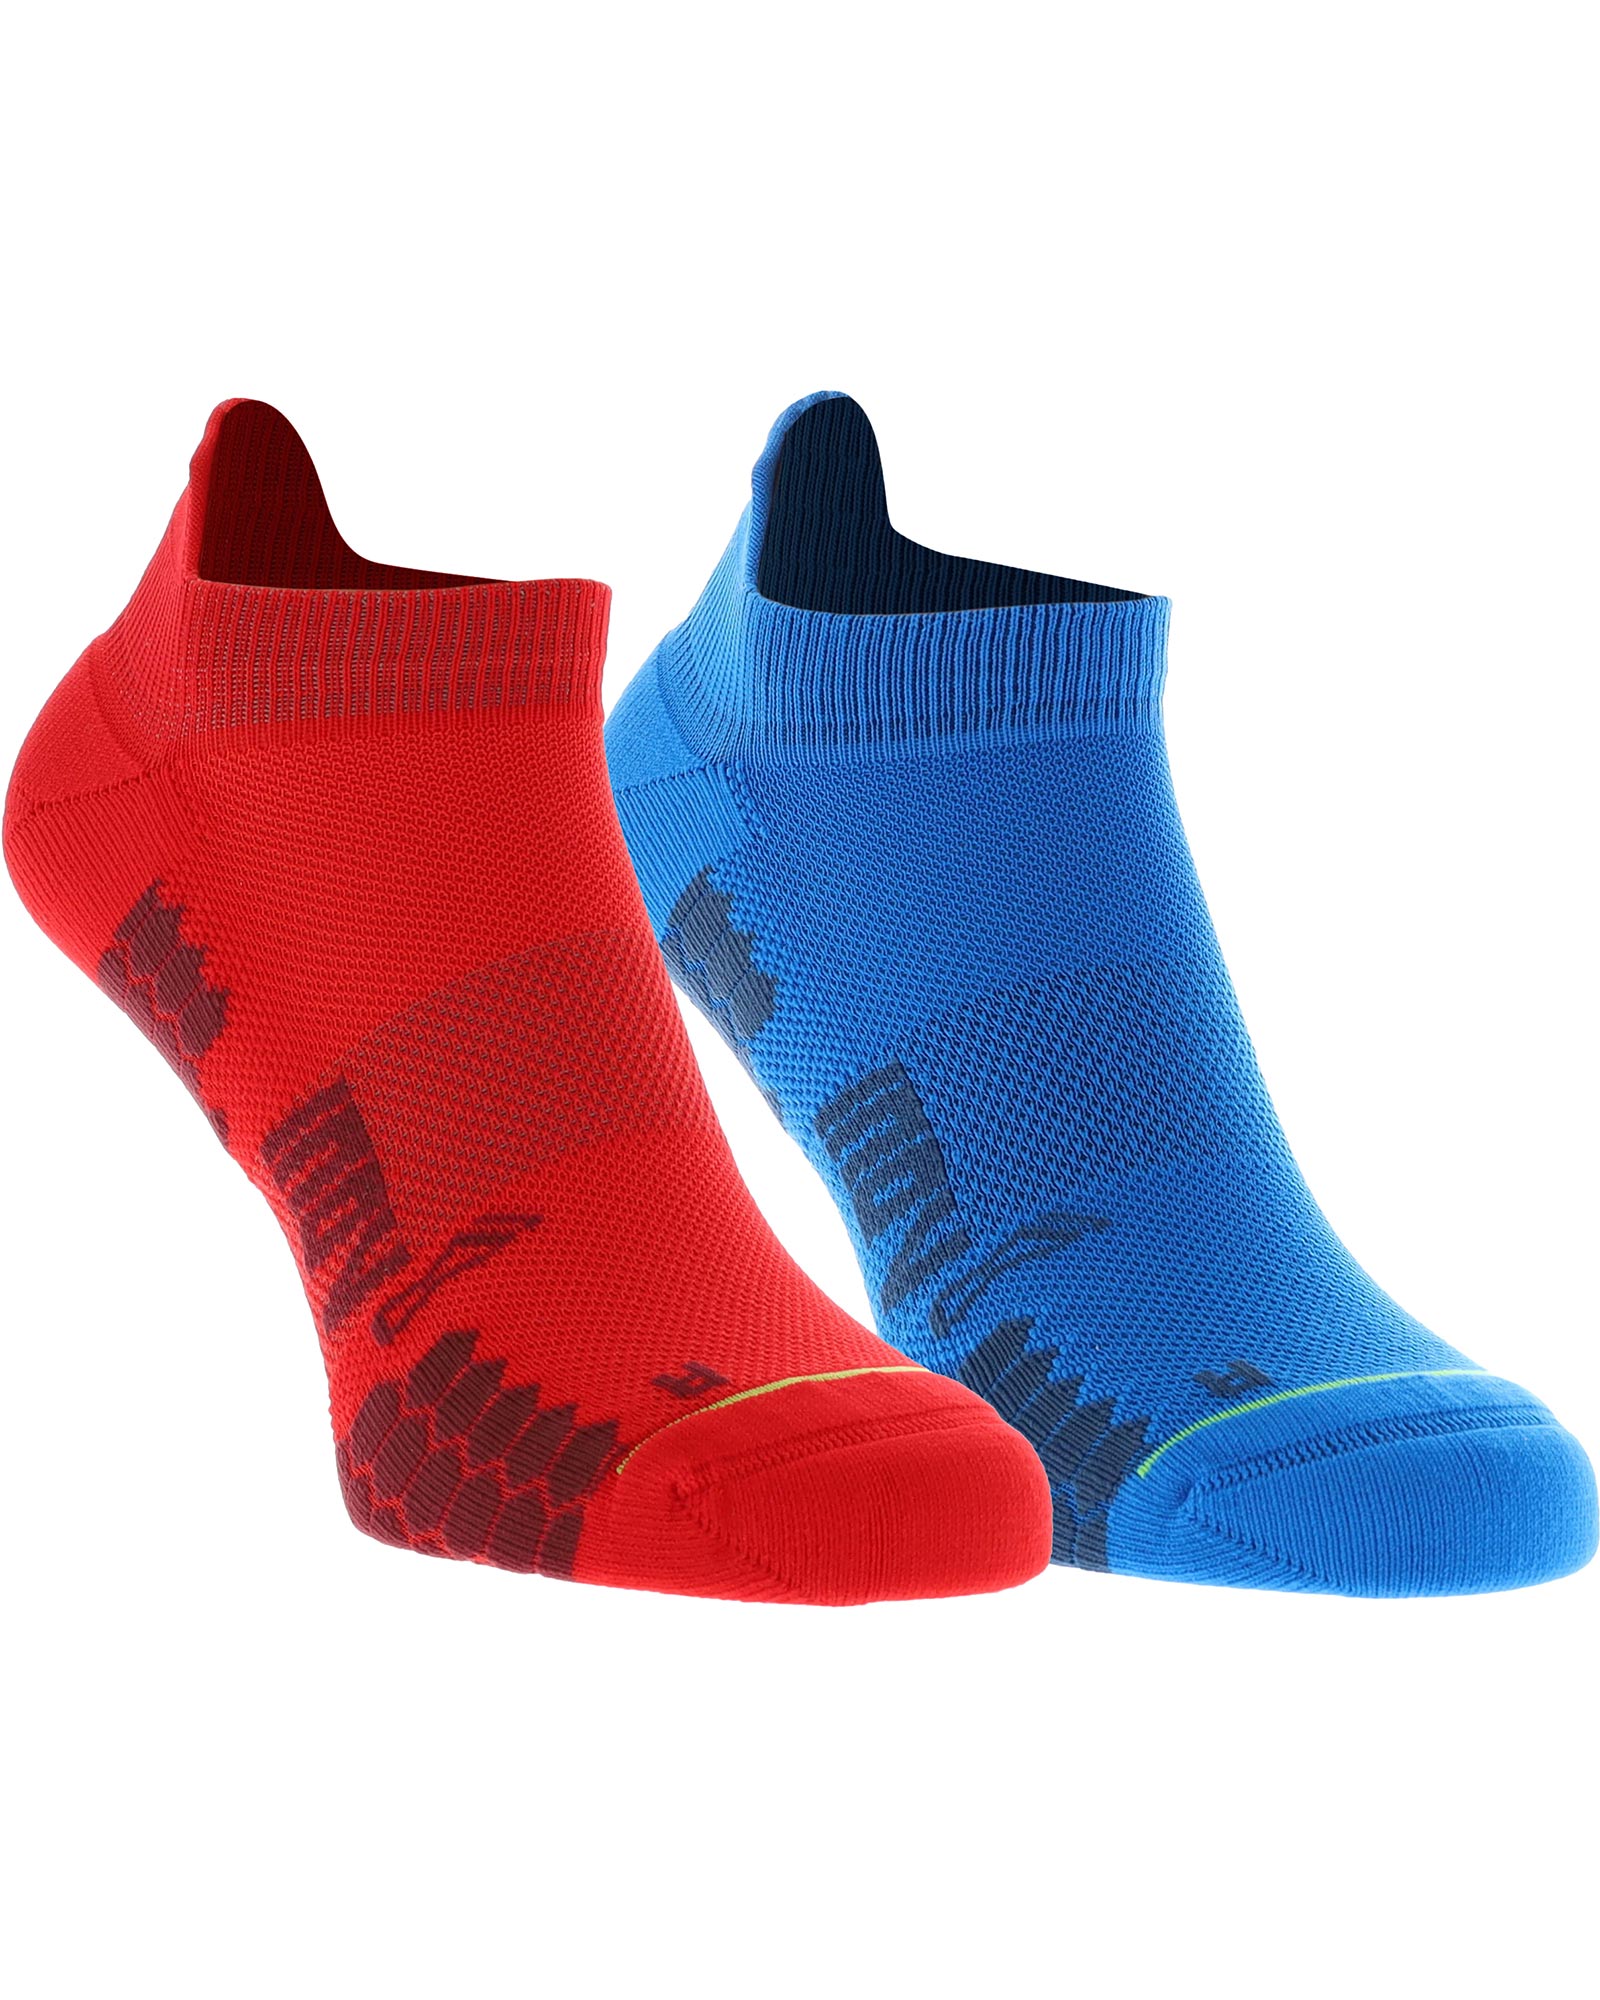 Inov 8 Trailfly Low Socks - Blue/Red L